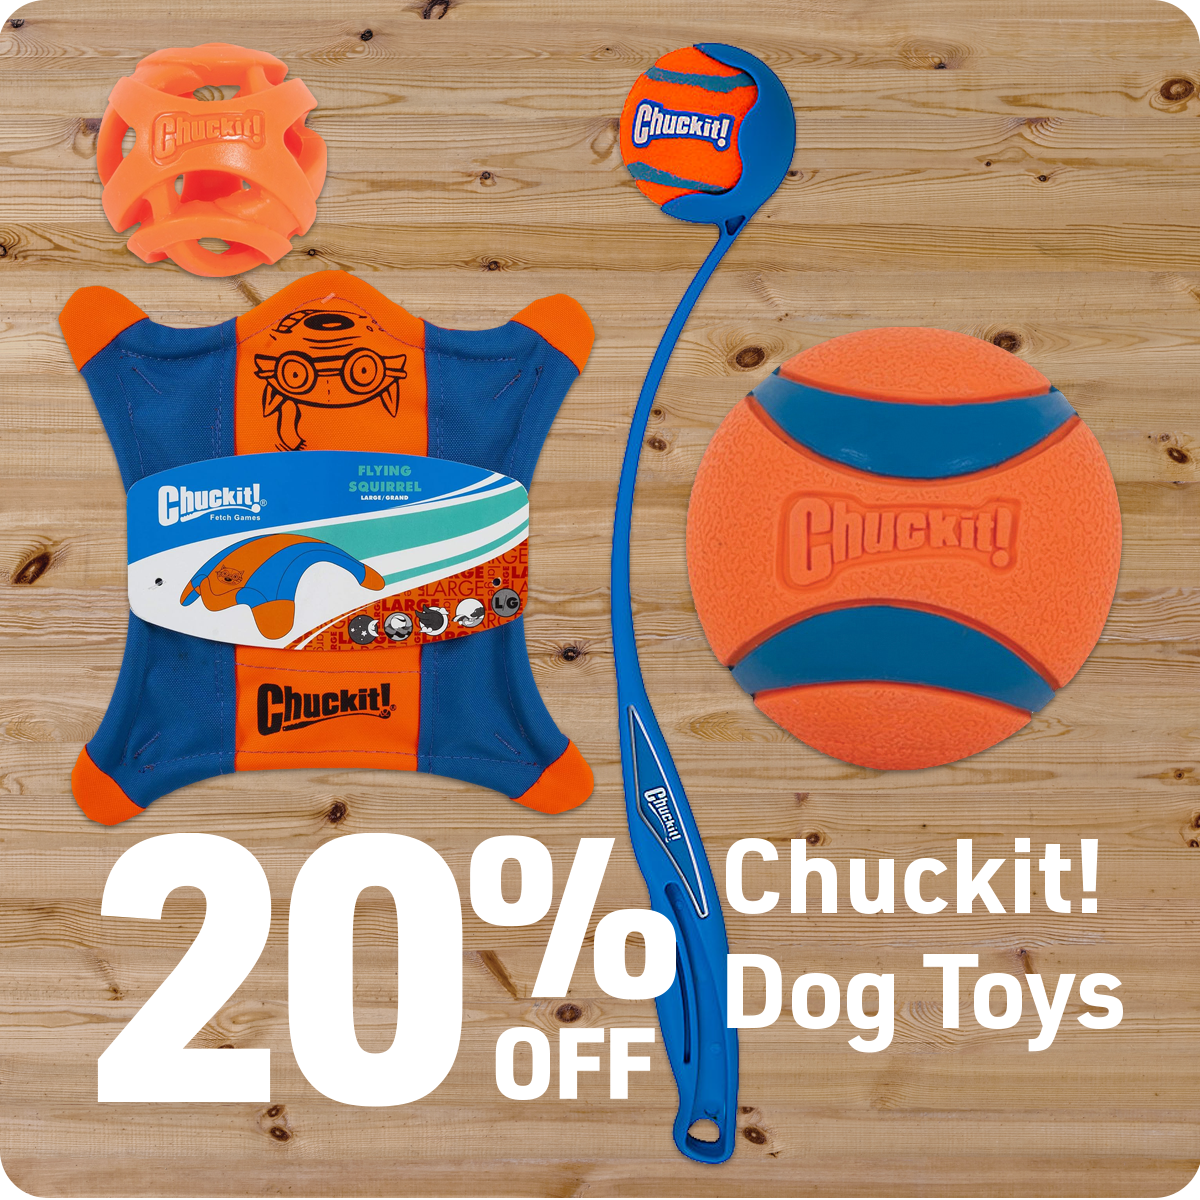 Chuckit! Dog Toys